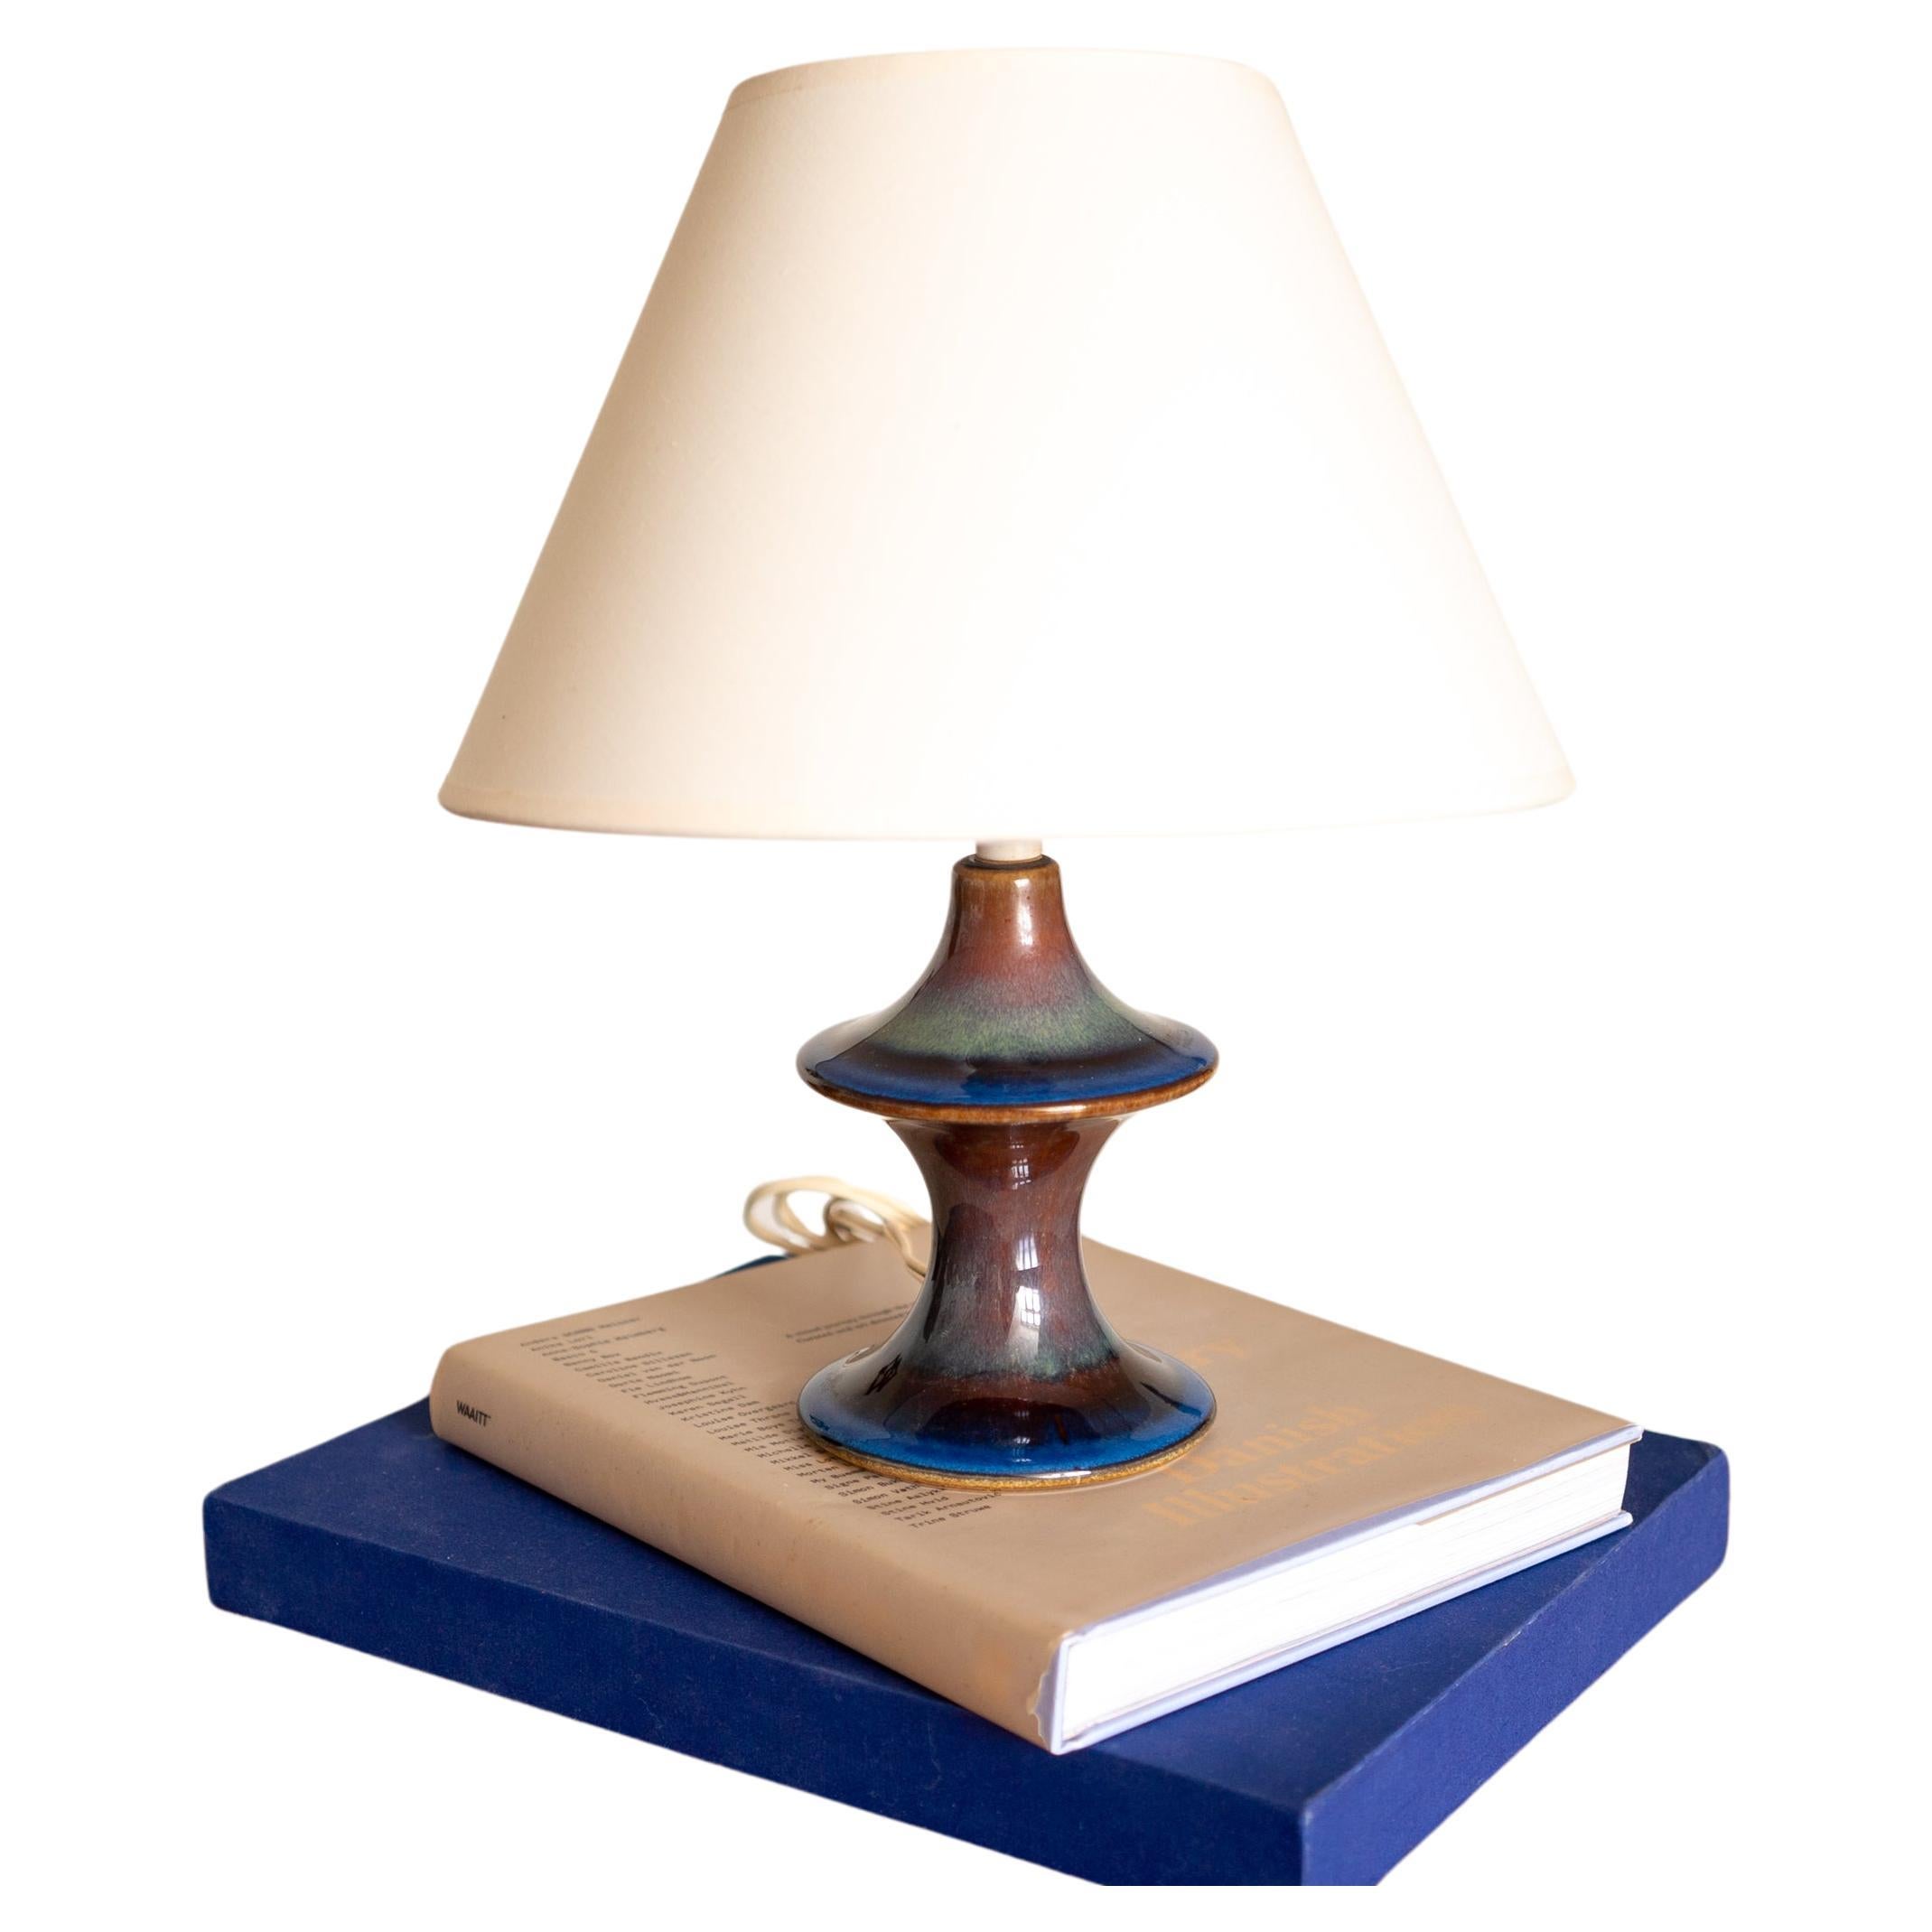 Søholm Table Lamp, Blue-Glazed Stoneware, Bornholm, Denmark, c. 1970s For Sale